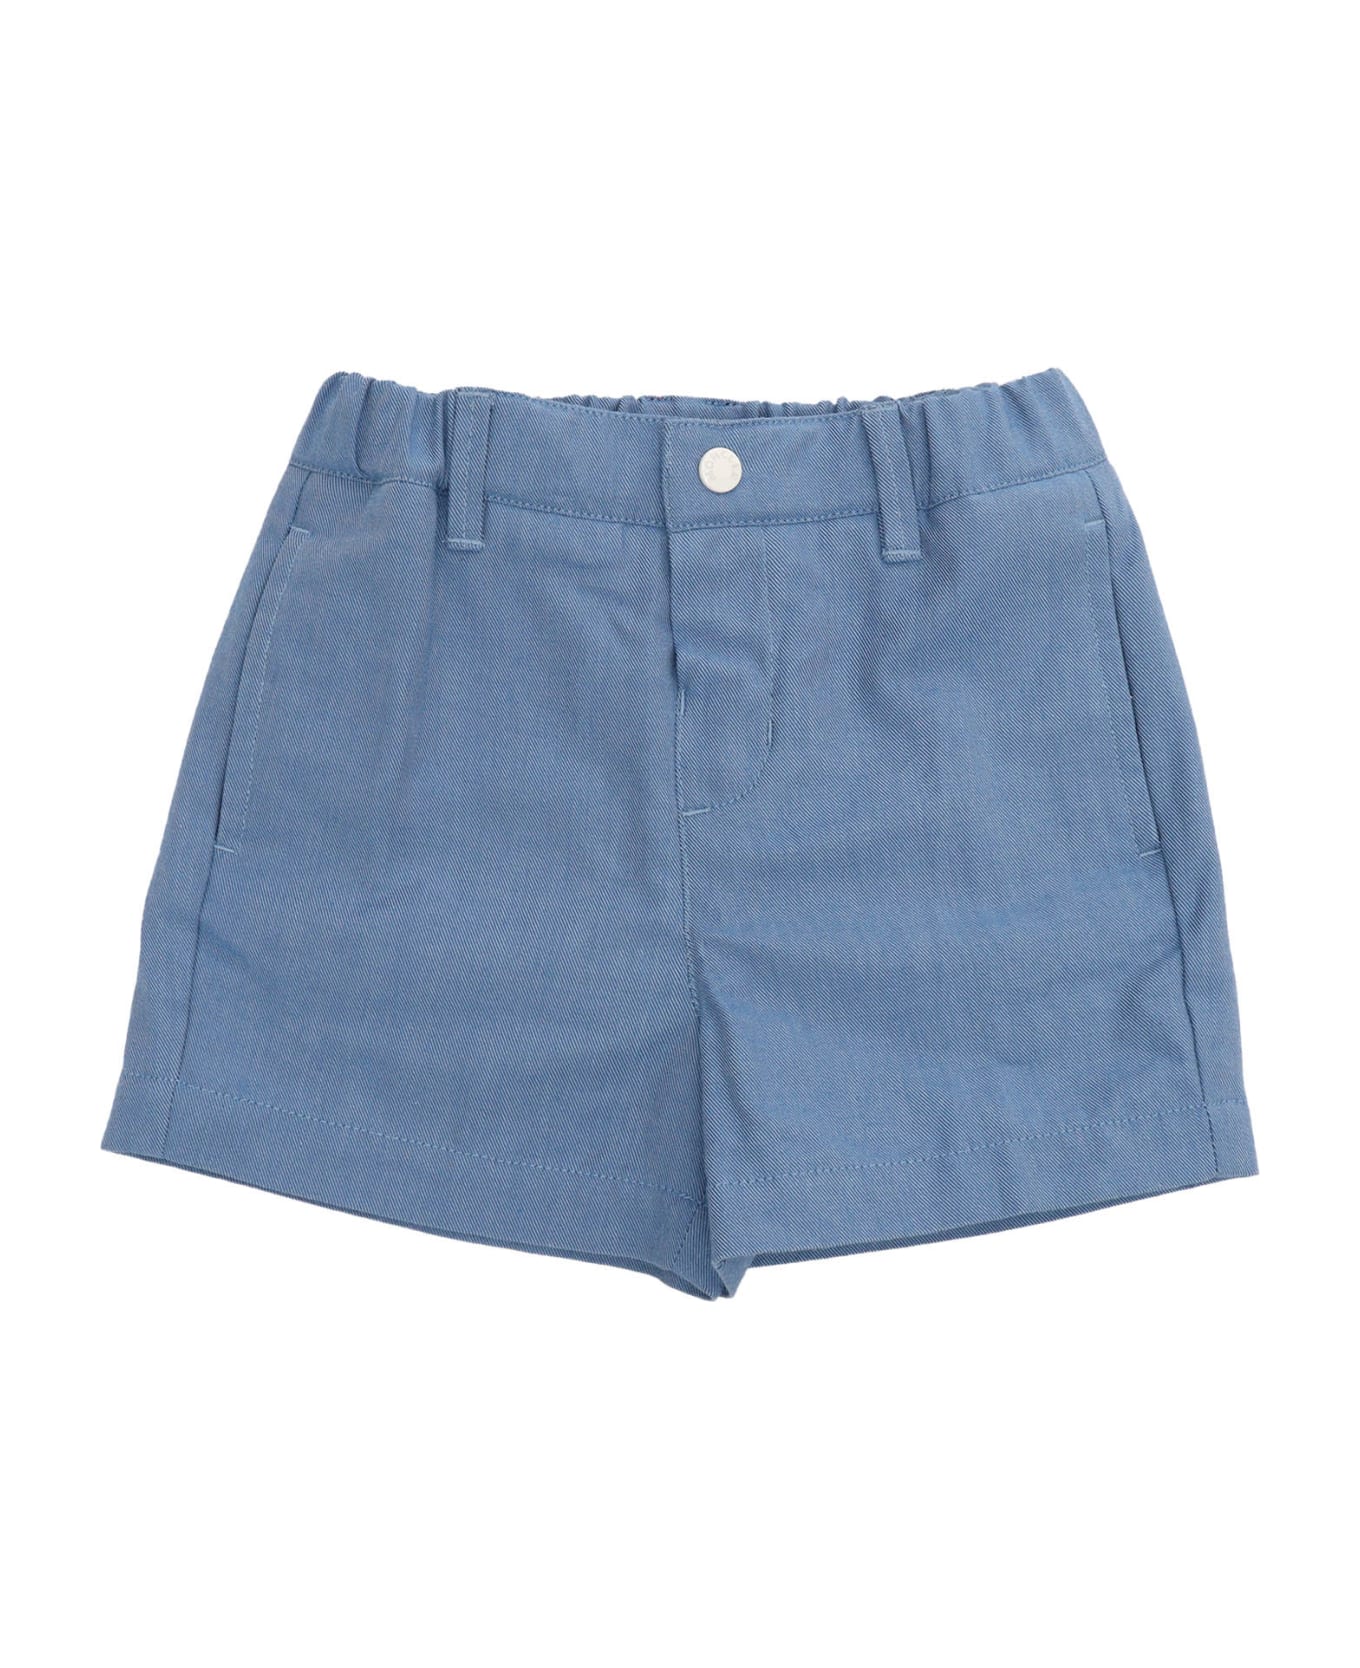 Moncler Light Blue Shorts - LIGHT BLUE